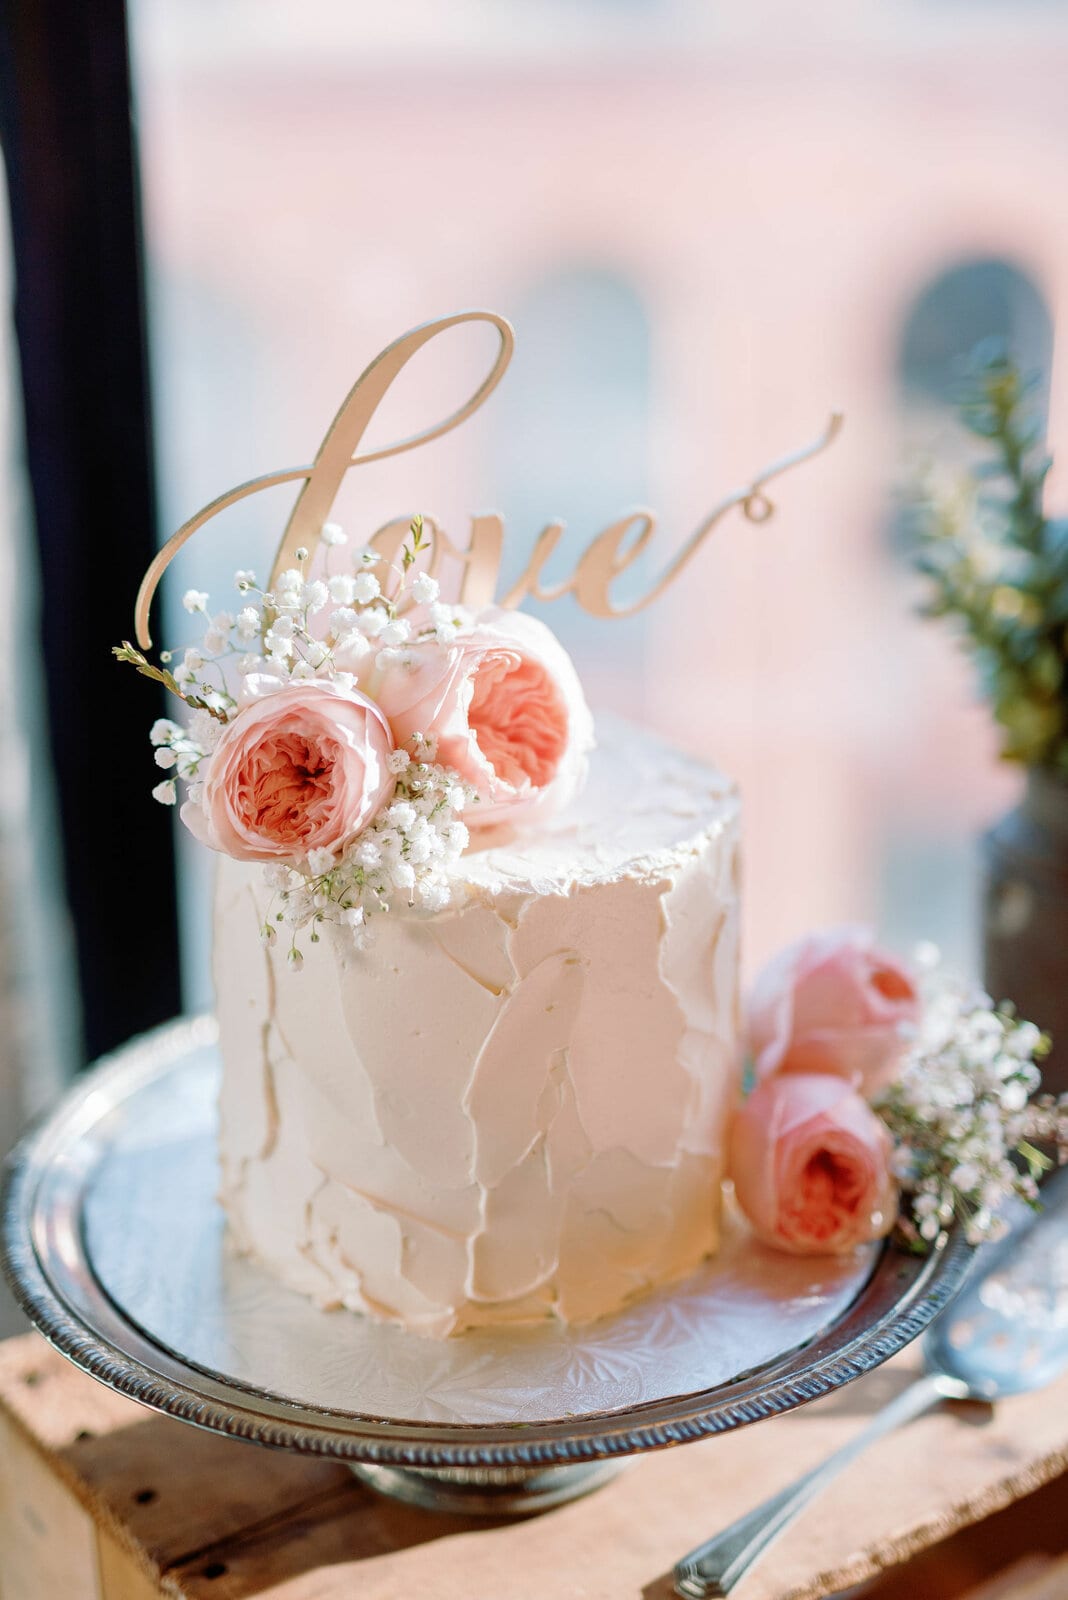 storys building toronto wedding venue modern romantic luxury wedding cake jacqueline james photography